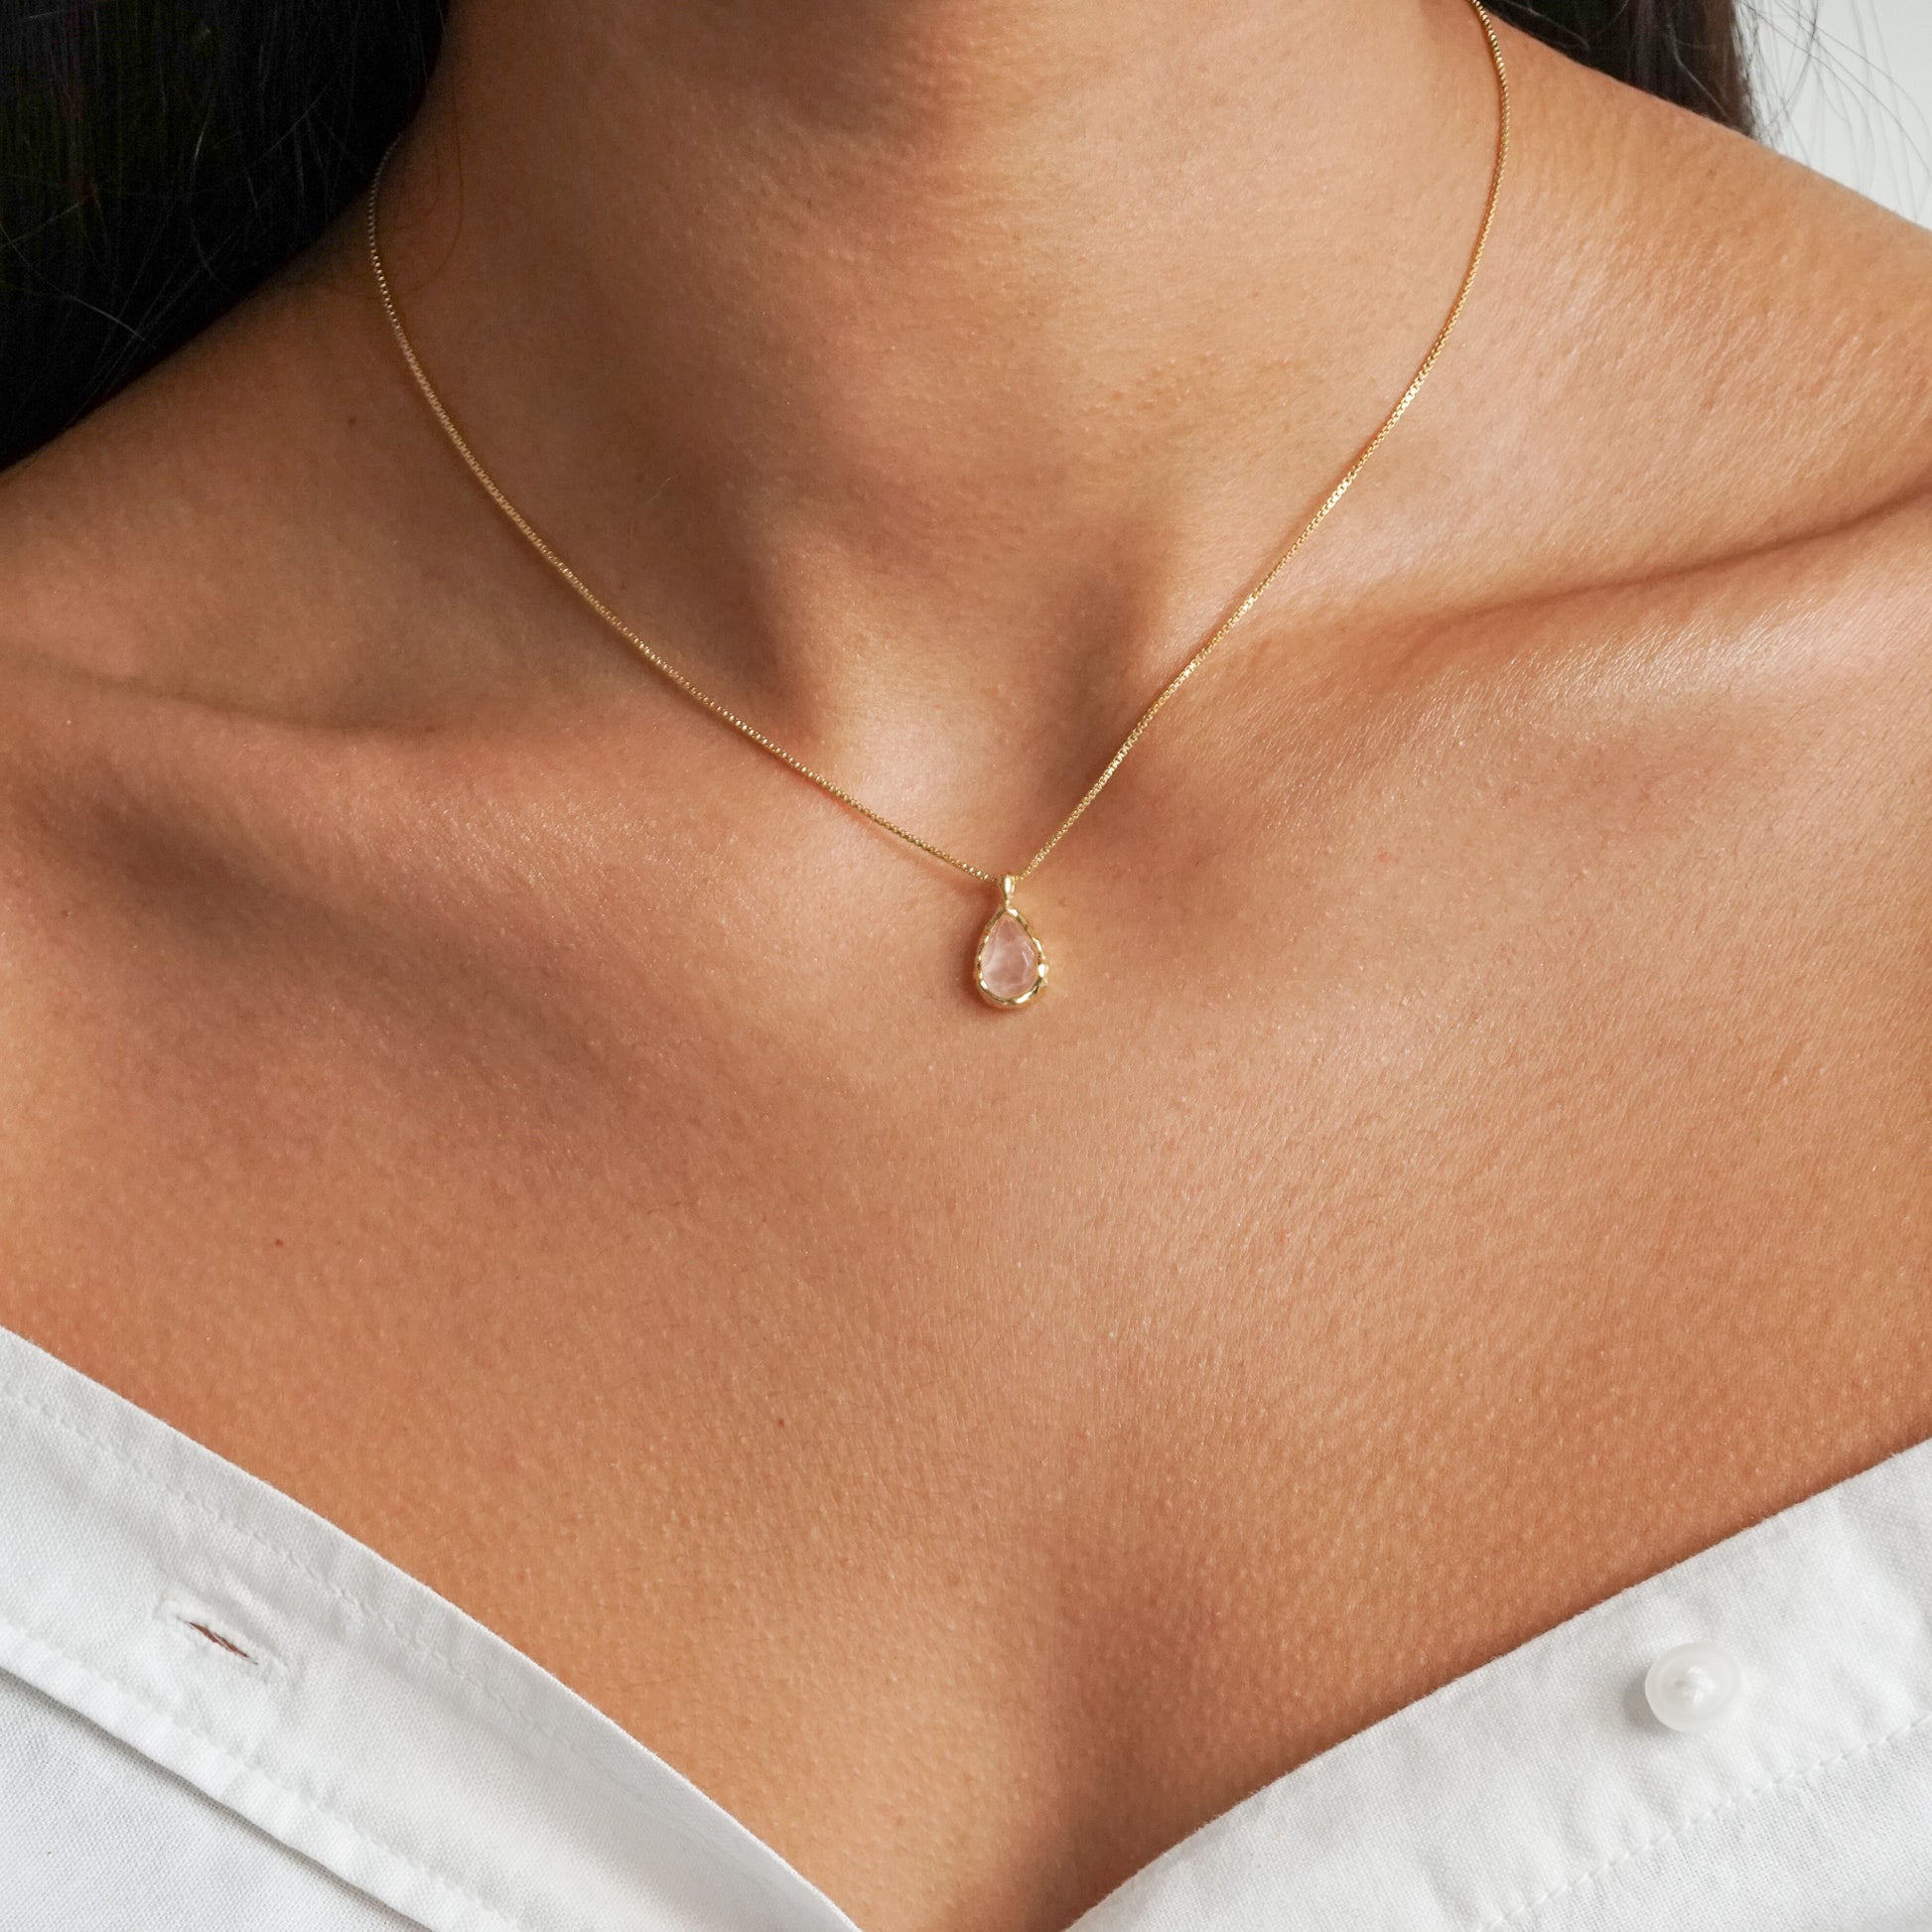 Teardrop shape pink rose quartz pendant with irregular faceting on a 18k gold vermeil box chain on a model neck close up